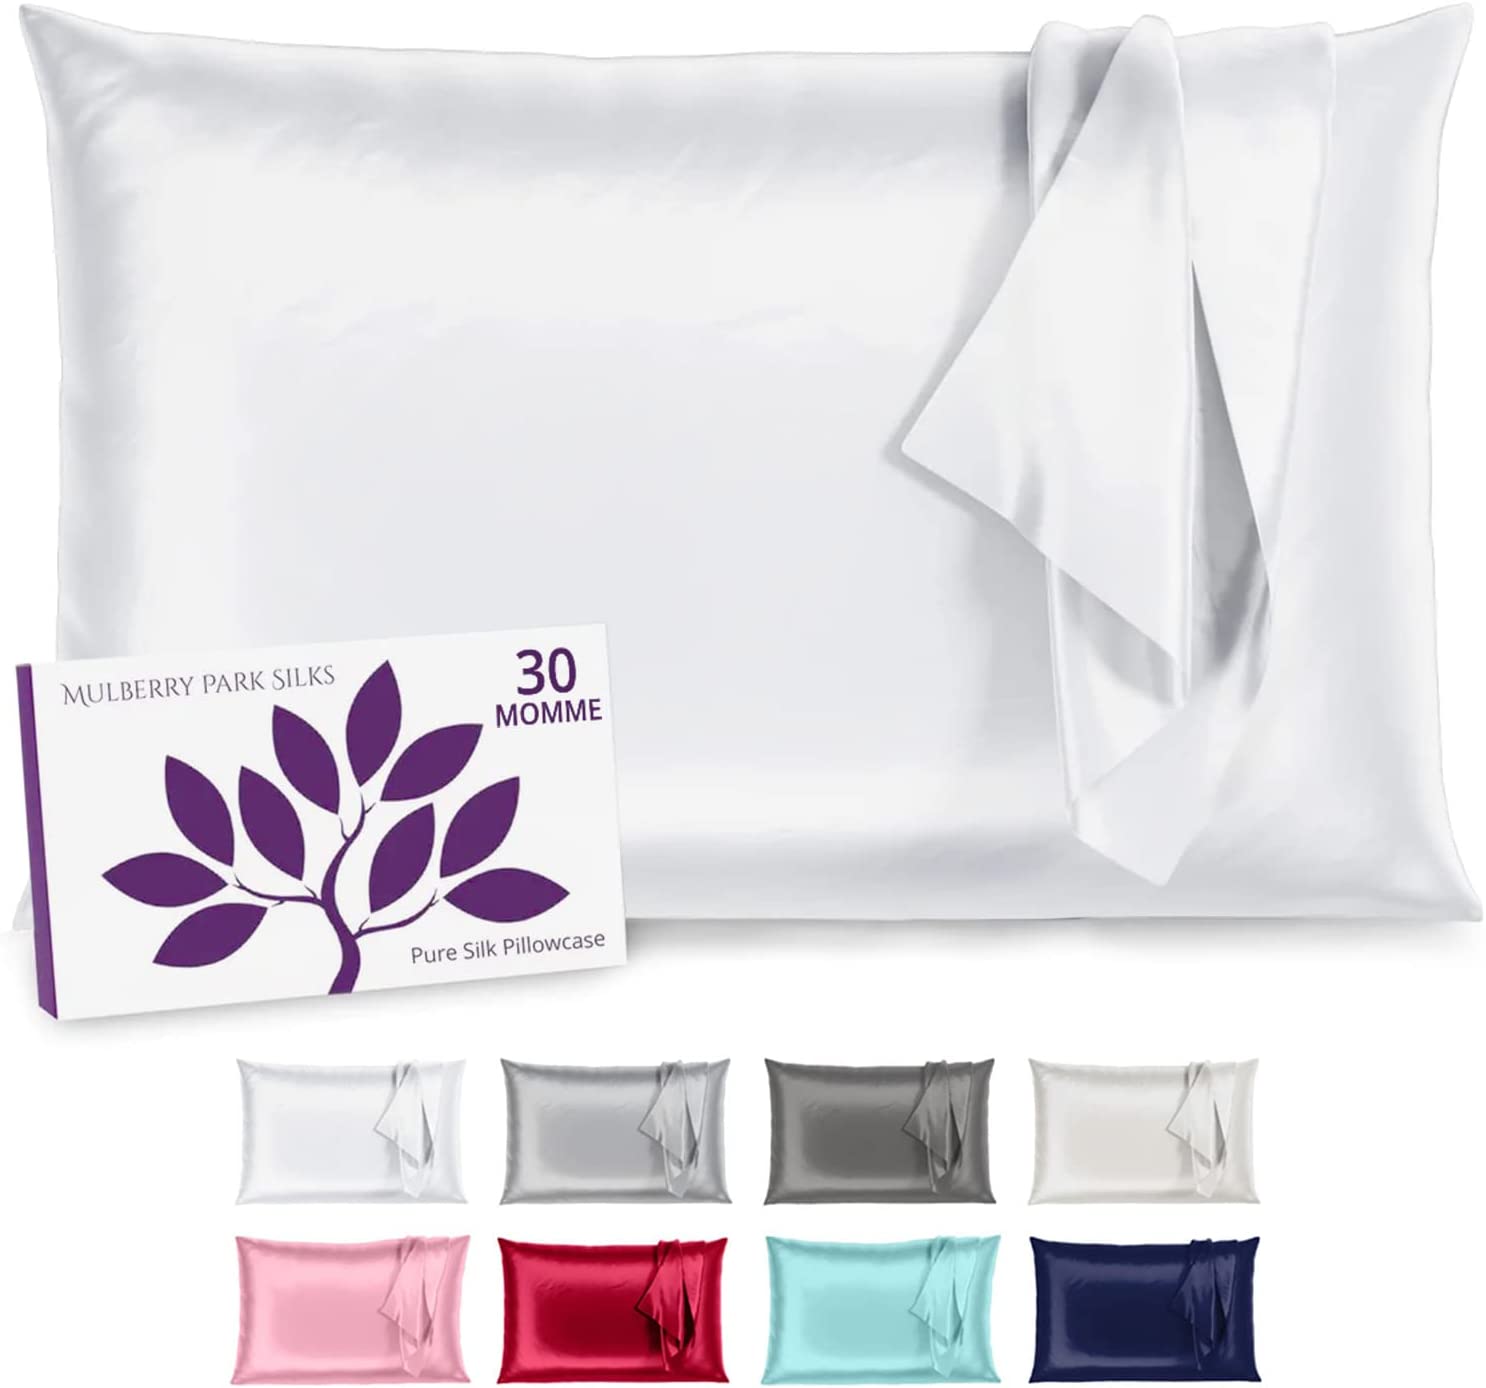 DreamSilk 30 Momme Silk Pillowcase